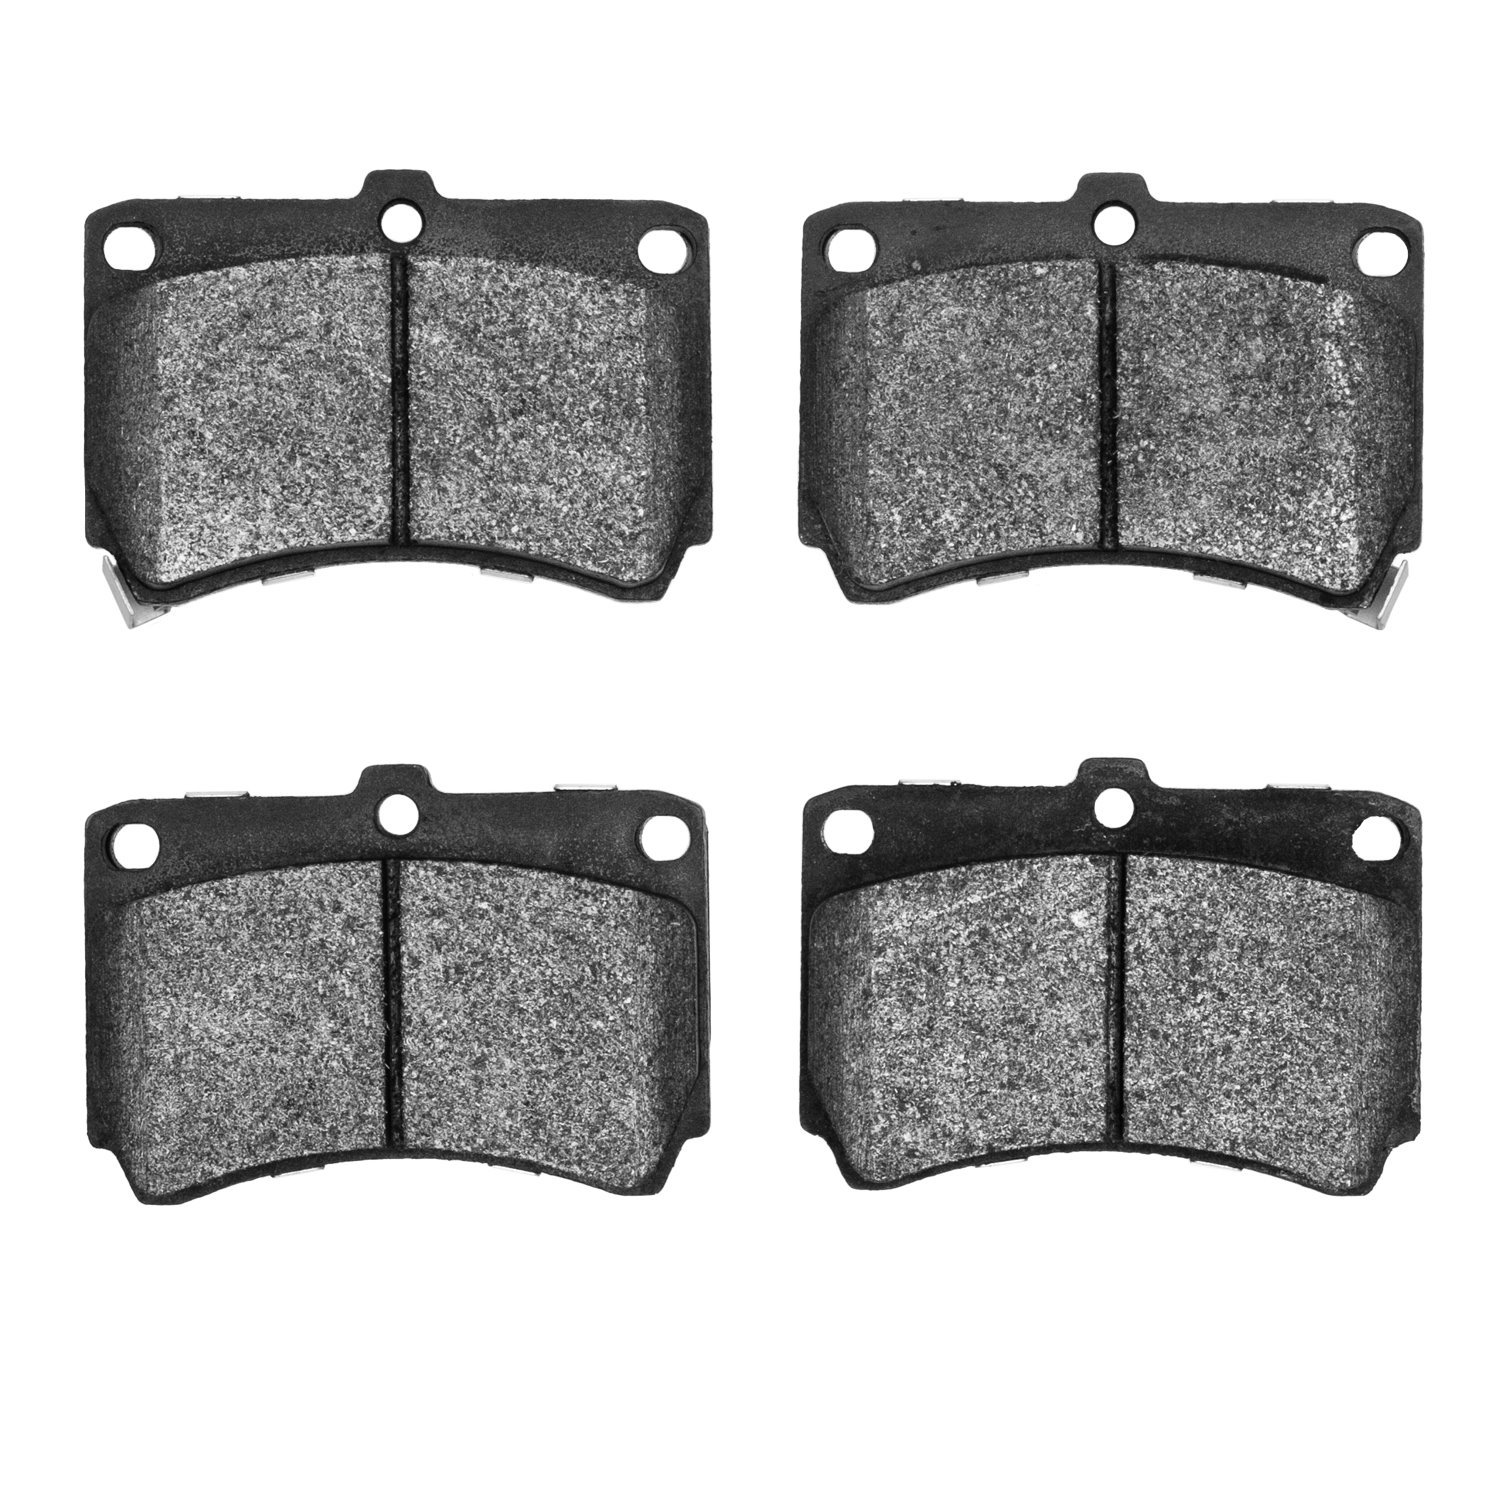 Semi-Metallic Brake Pads, 1990-2002 Fits Multiple Makes/Models, Position: Front